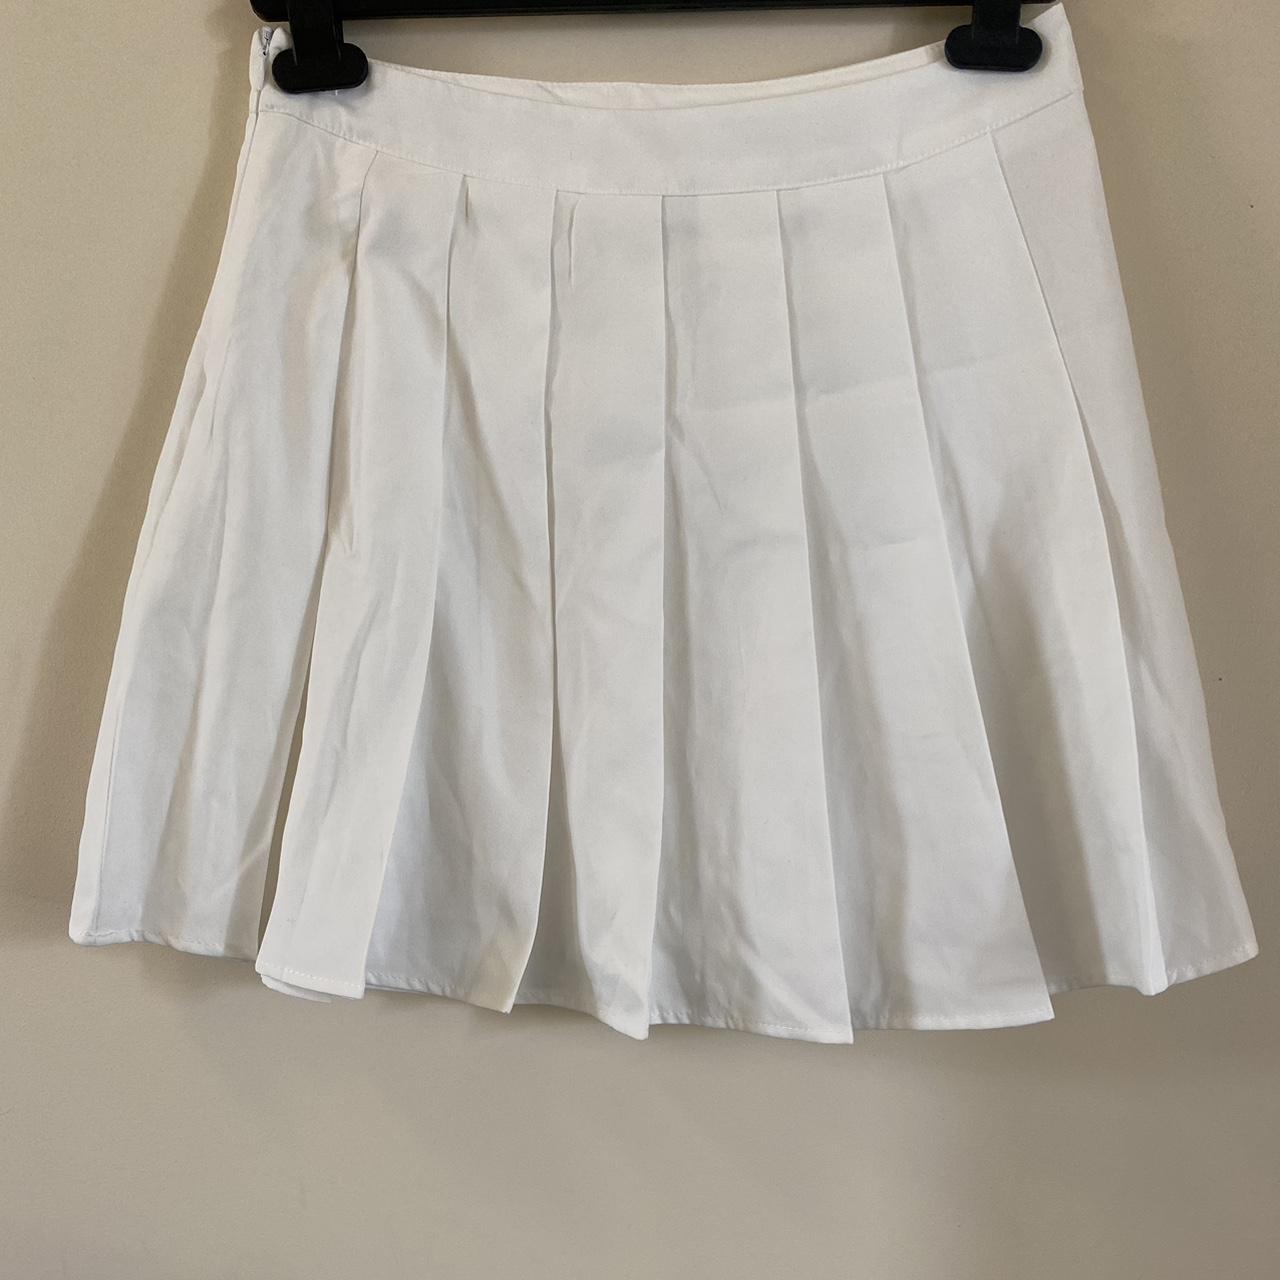 Cute white pleated tennis skirt never worn high... - Depop